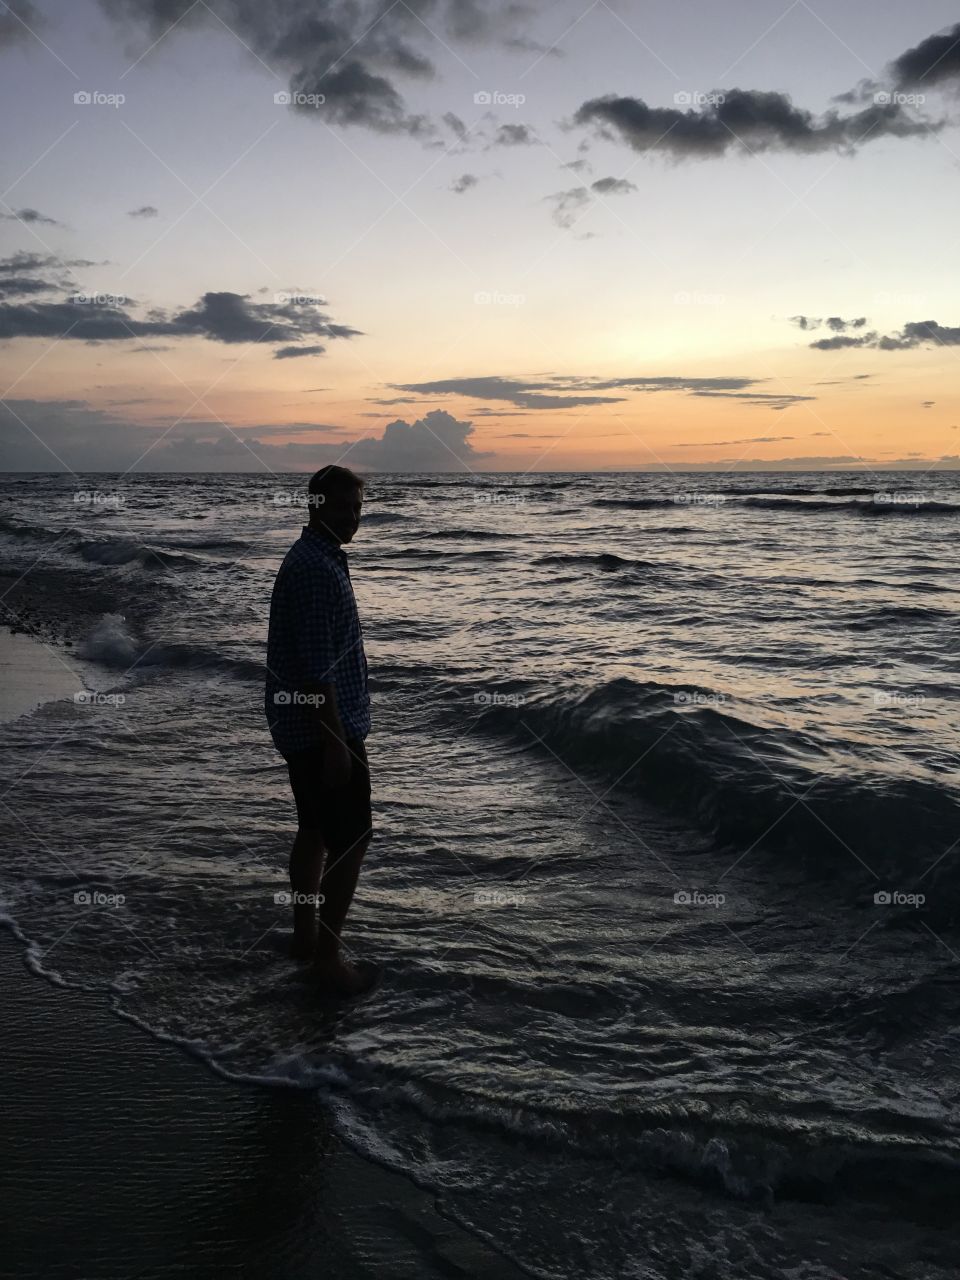 Beach, Sunset, Water, Ocean, Sea